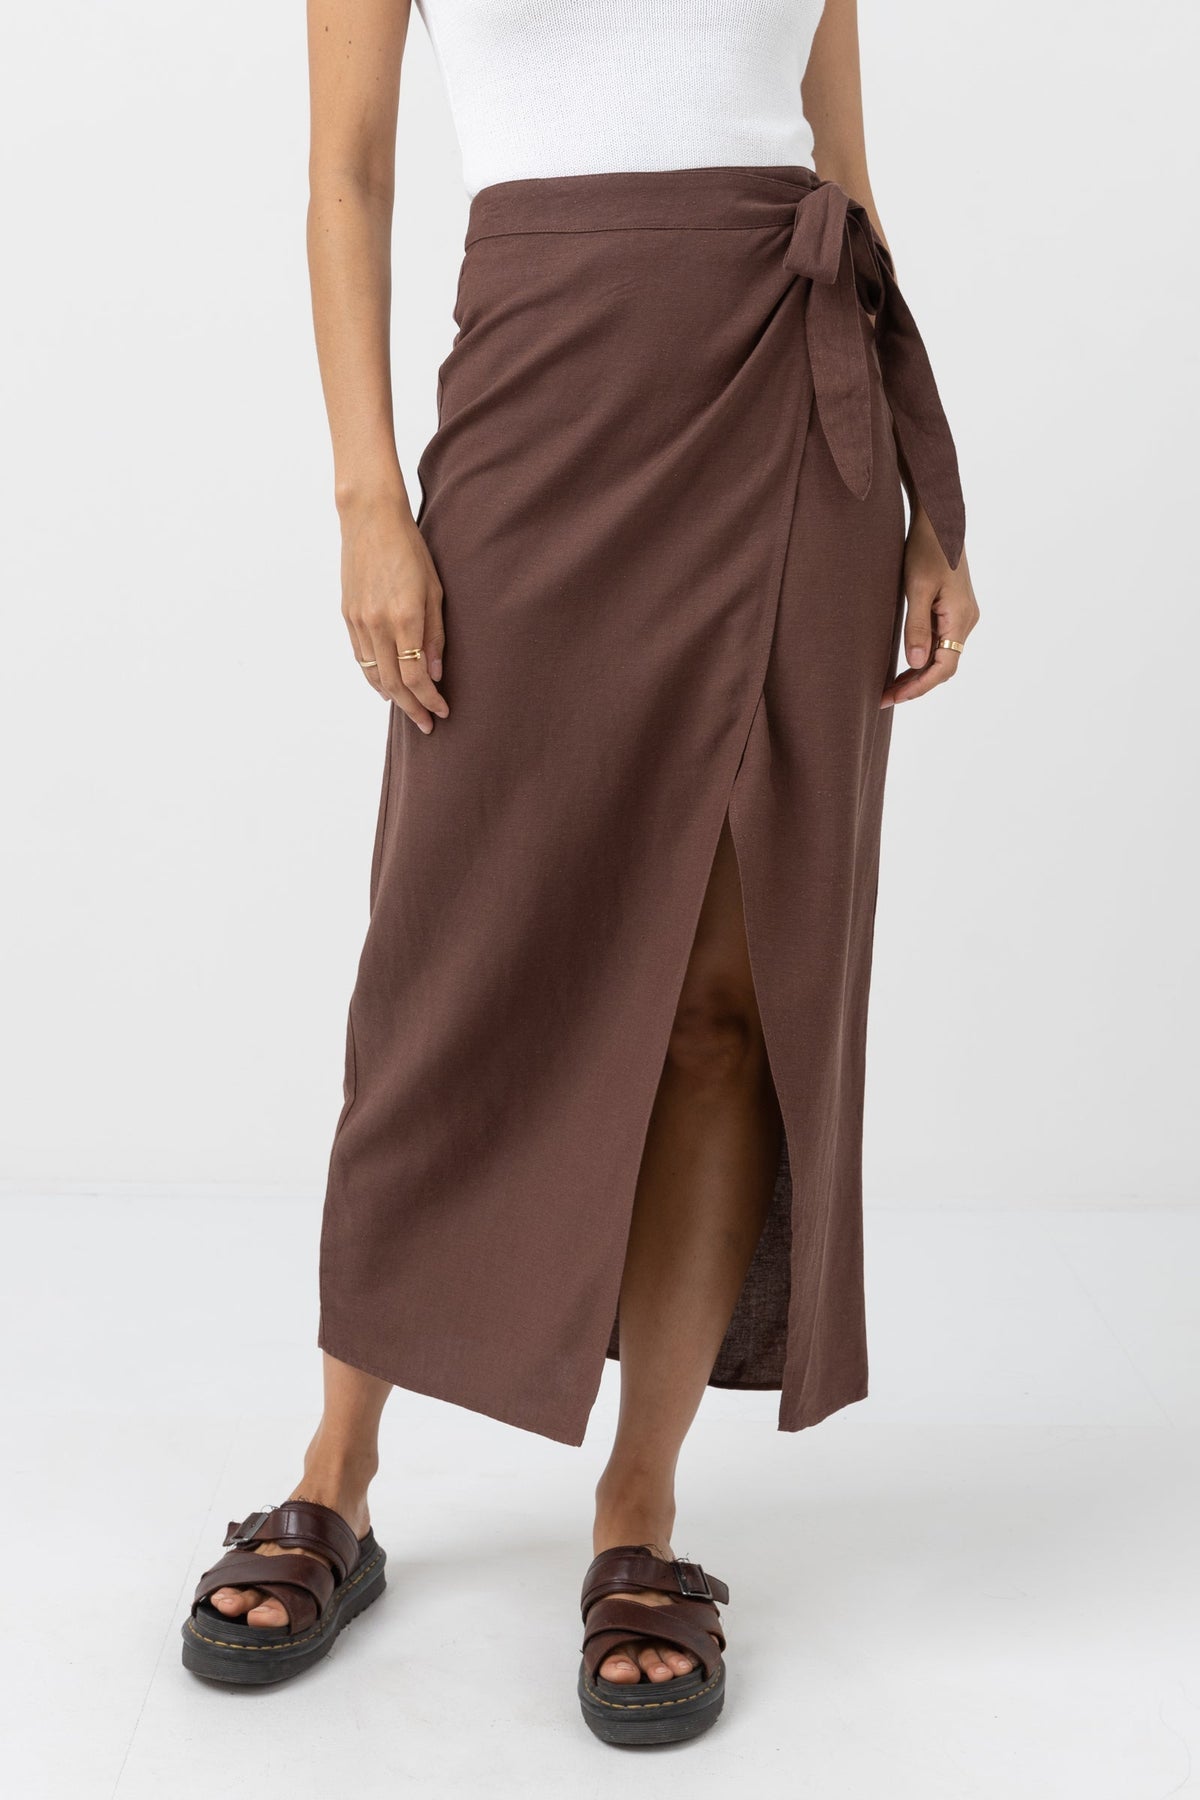 Lucinda Maxi Skirt